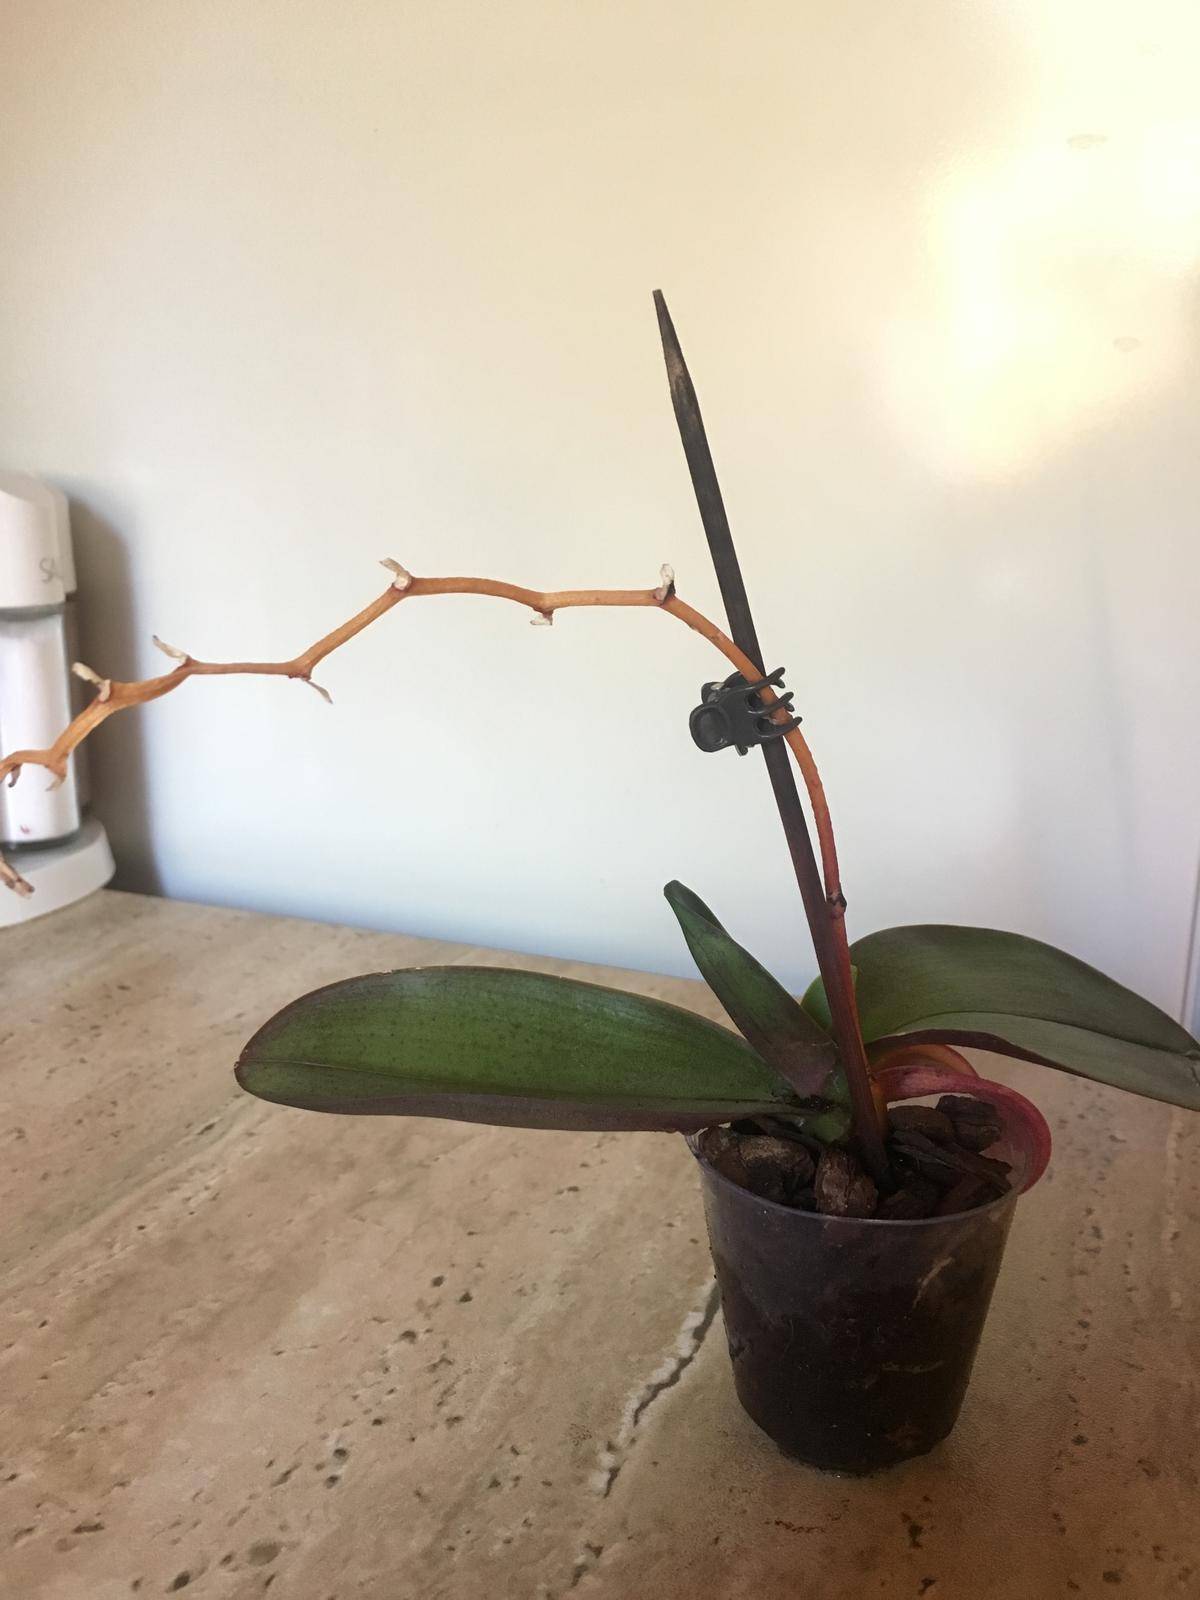 Орхидея фаленопсис 9 правил ухода в домашних условиях